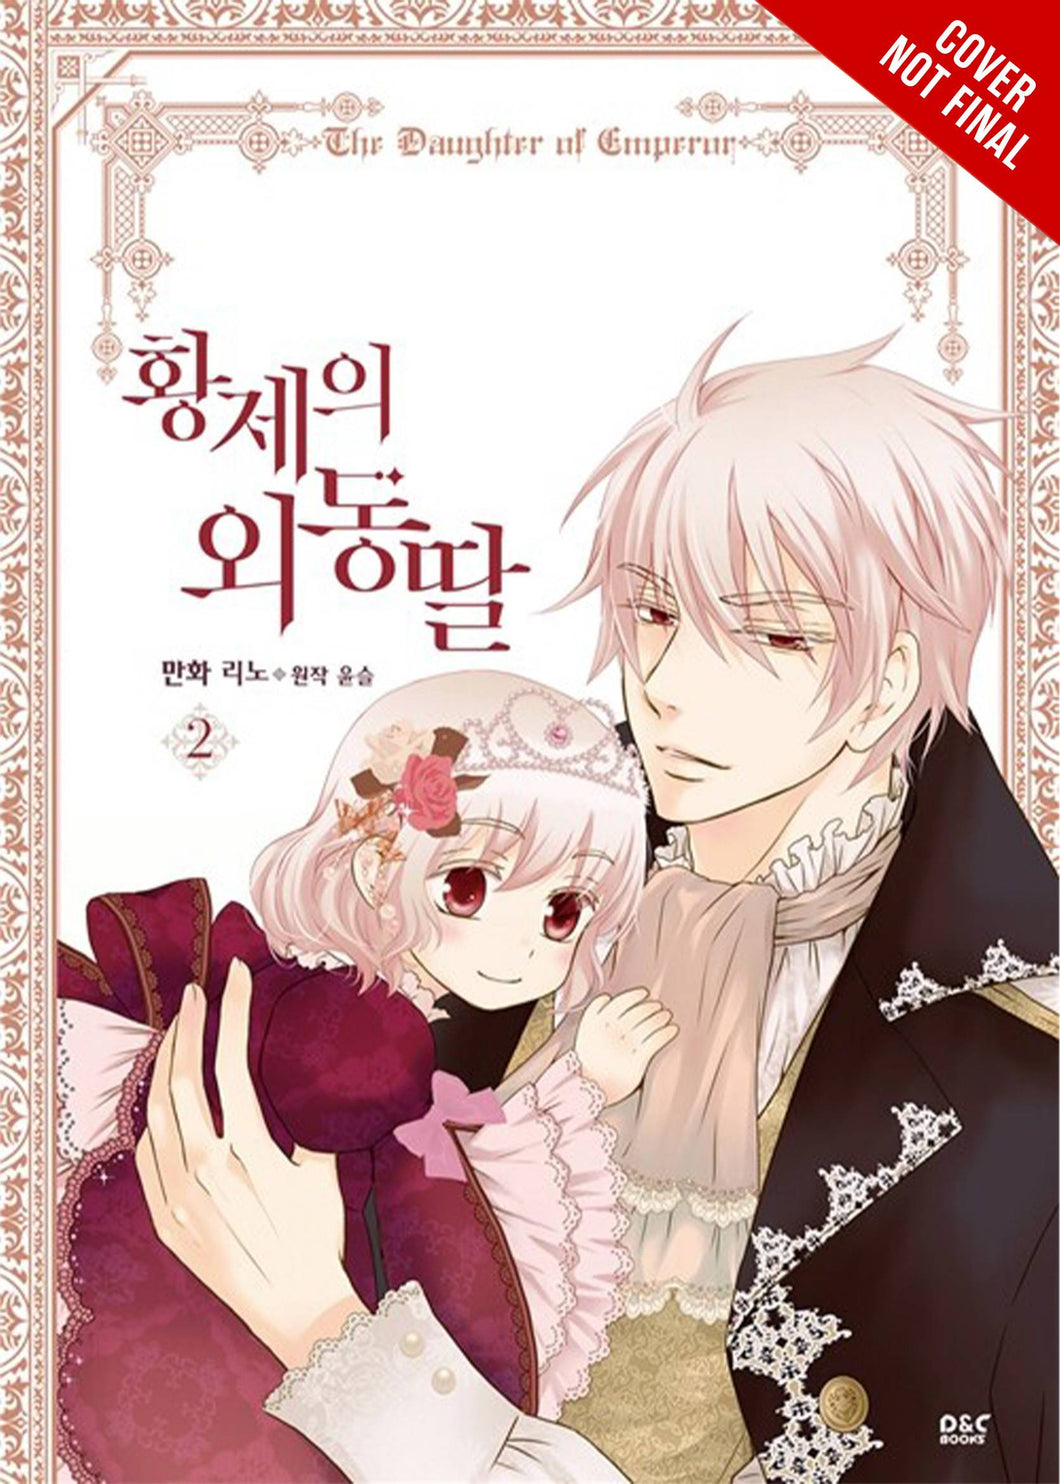 Daughter of Emperor GN Vol 02 - Books